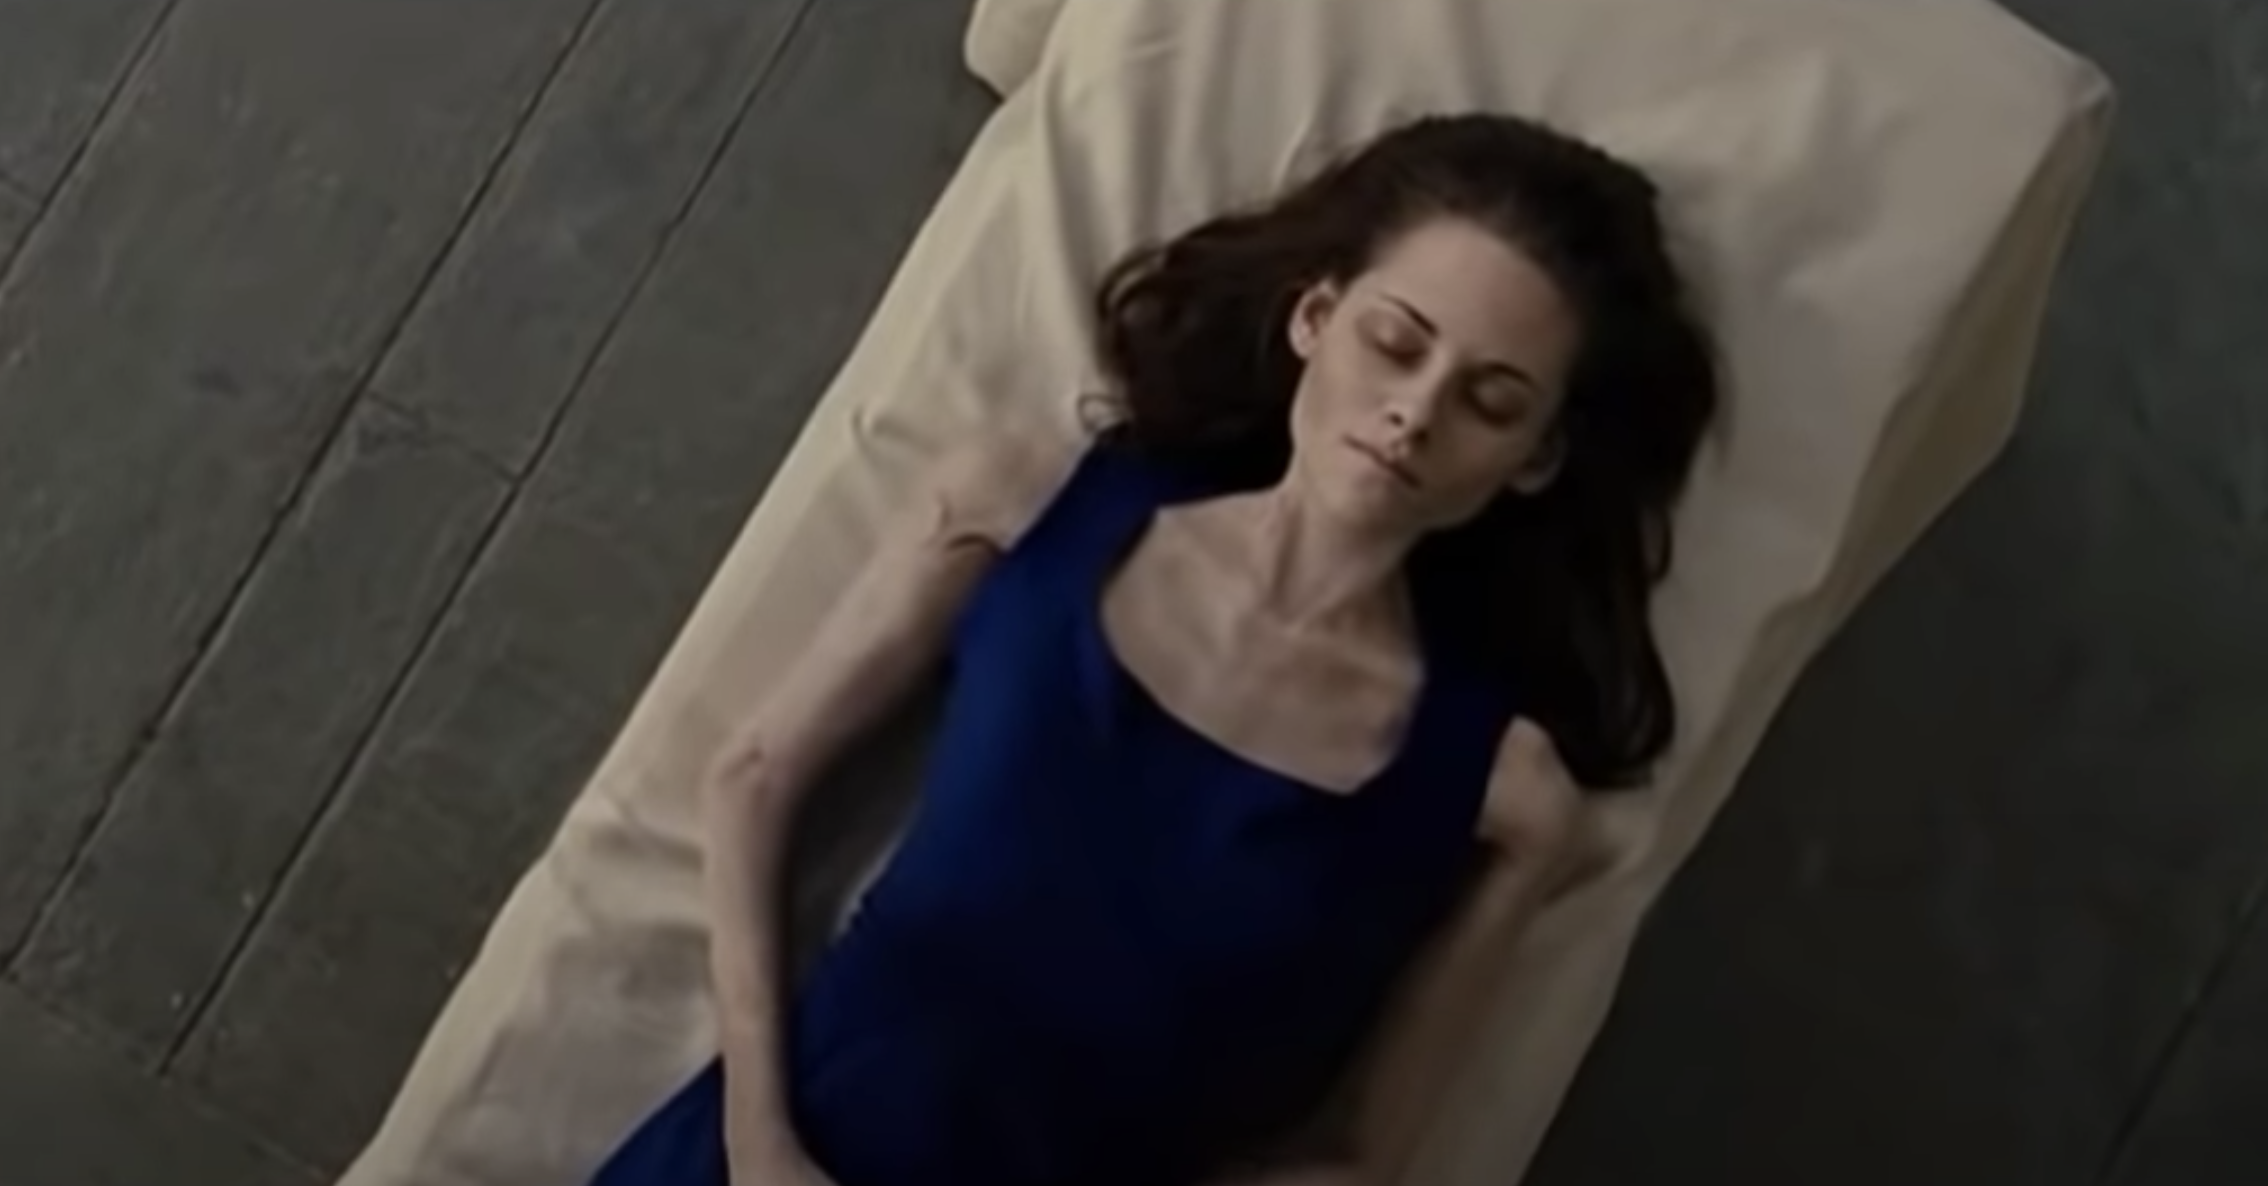 Bella lying lifeless on a bed